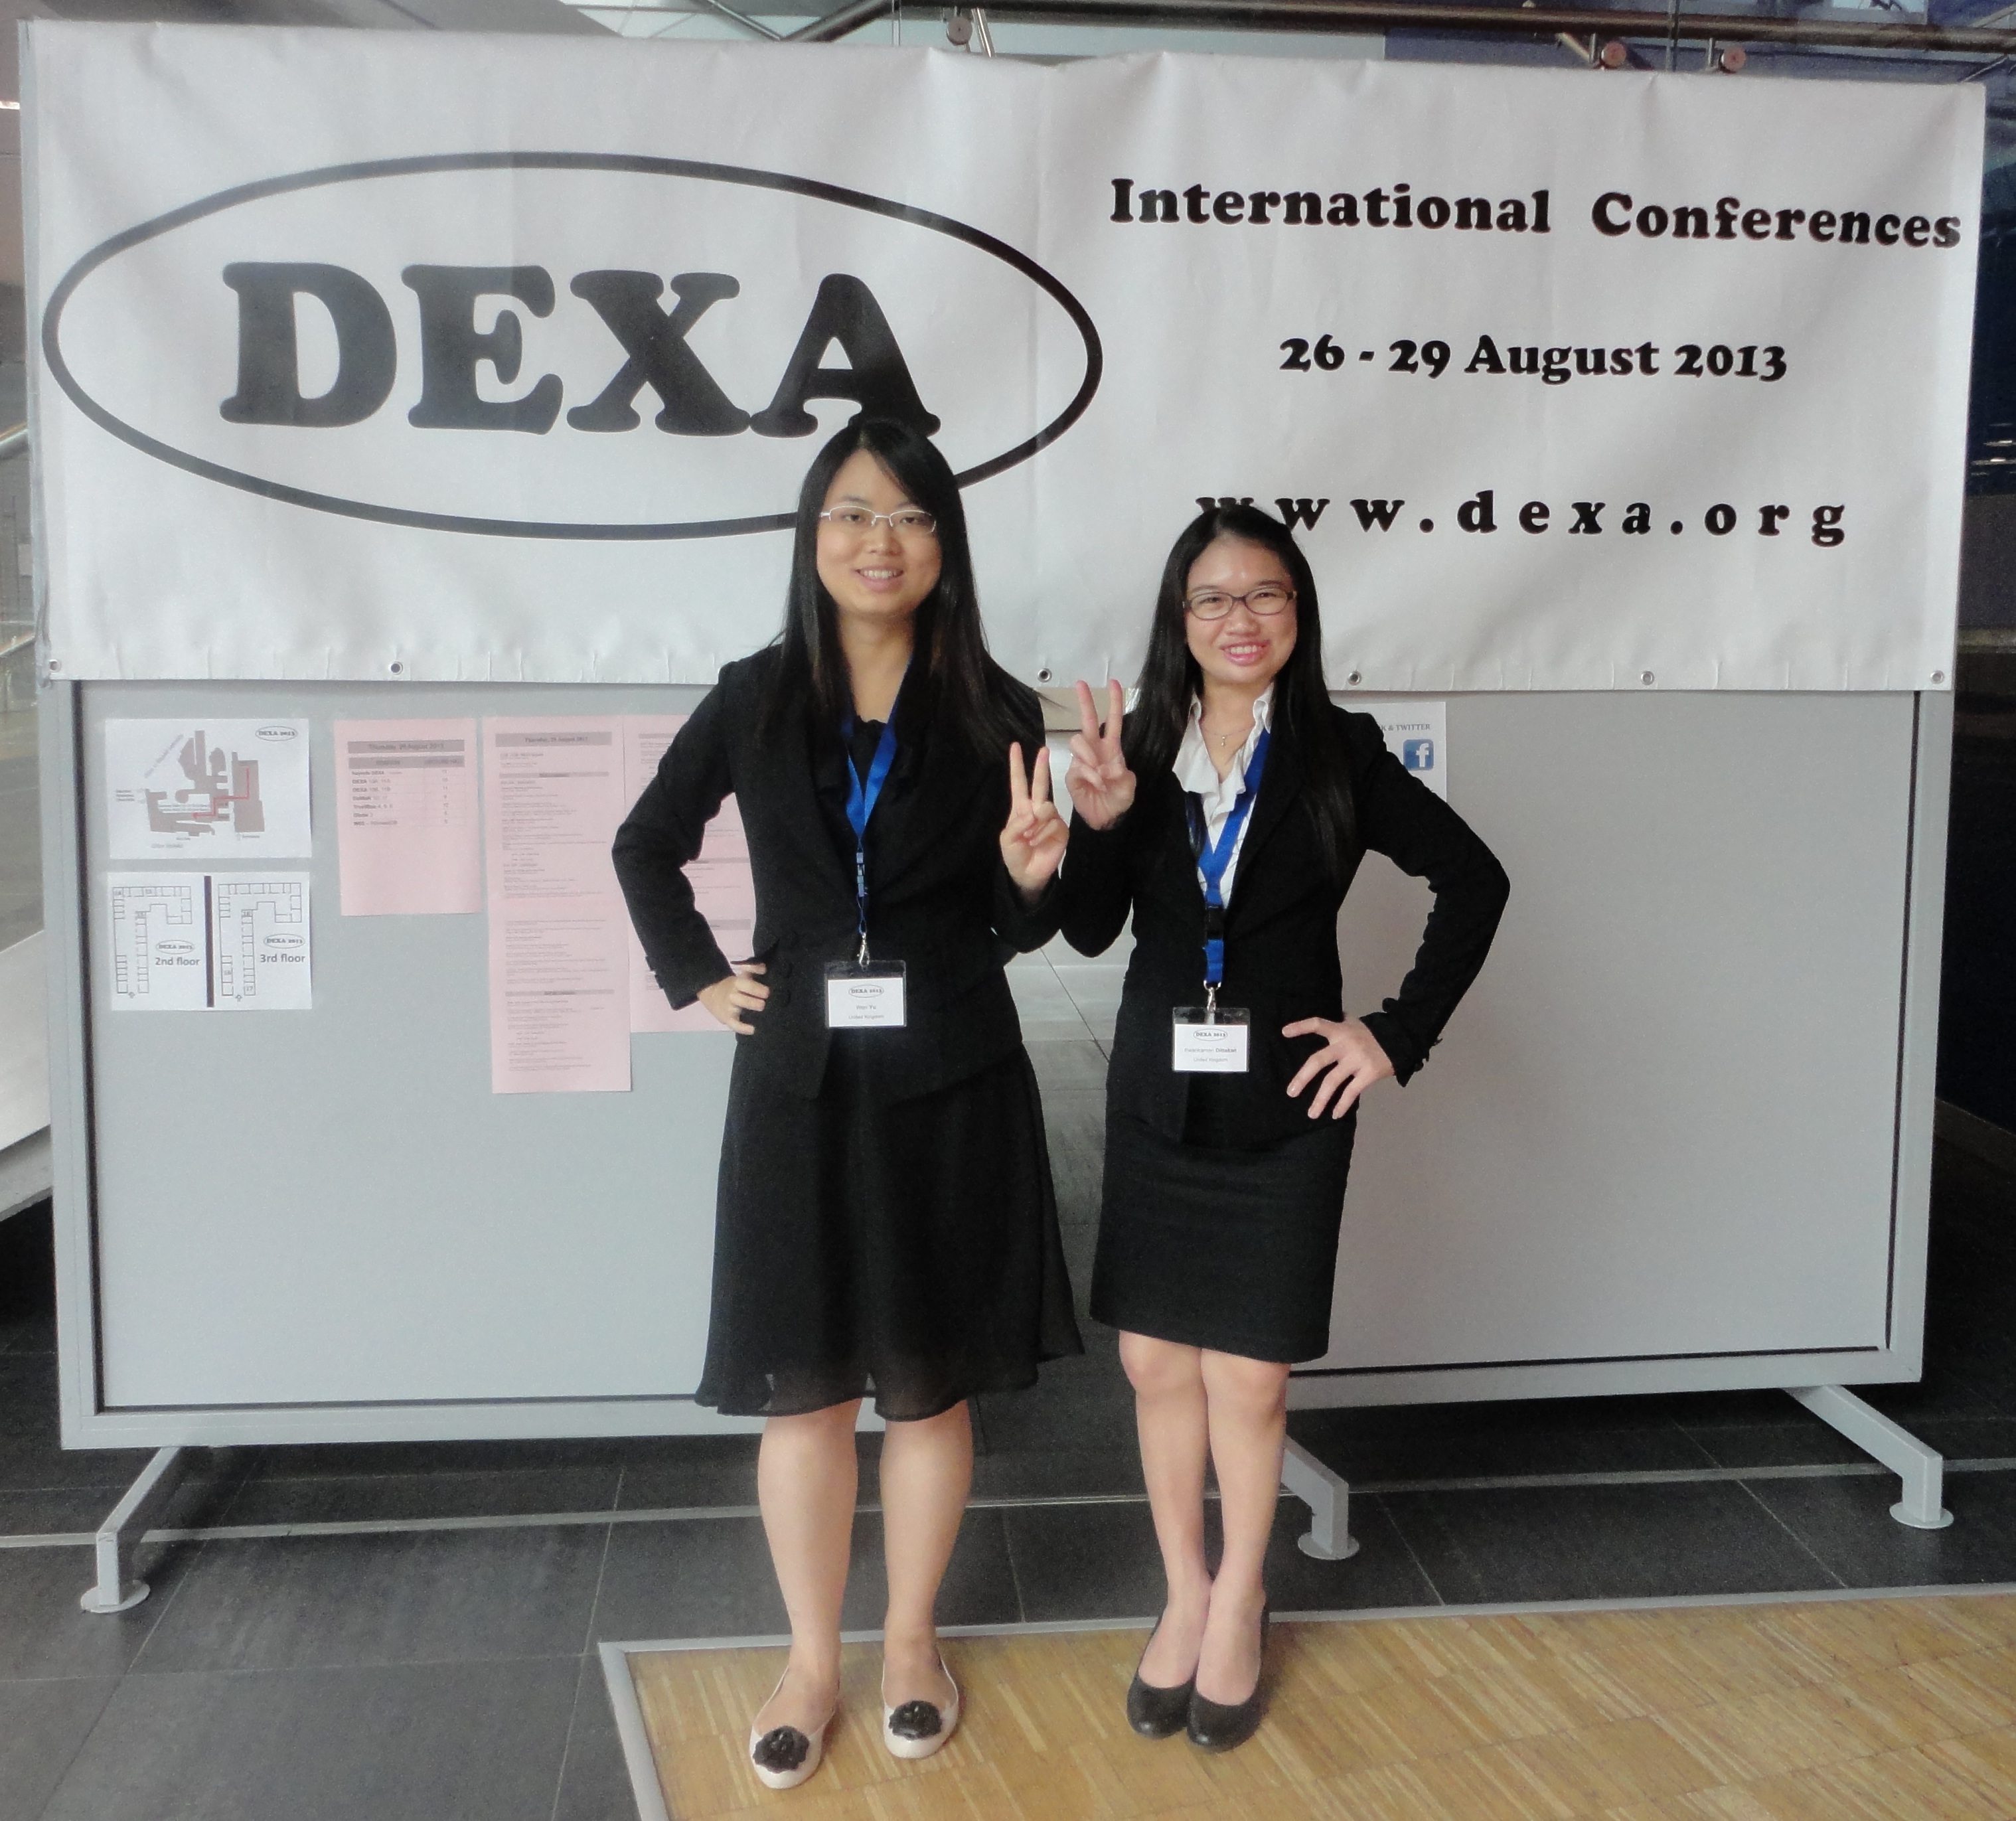 Liverpool PhD students at DEXA 2013